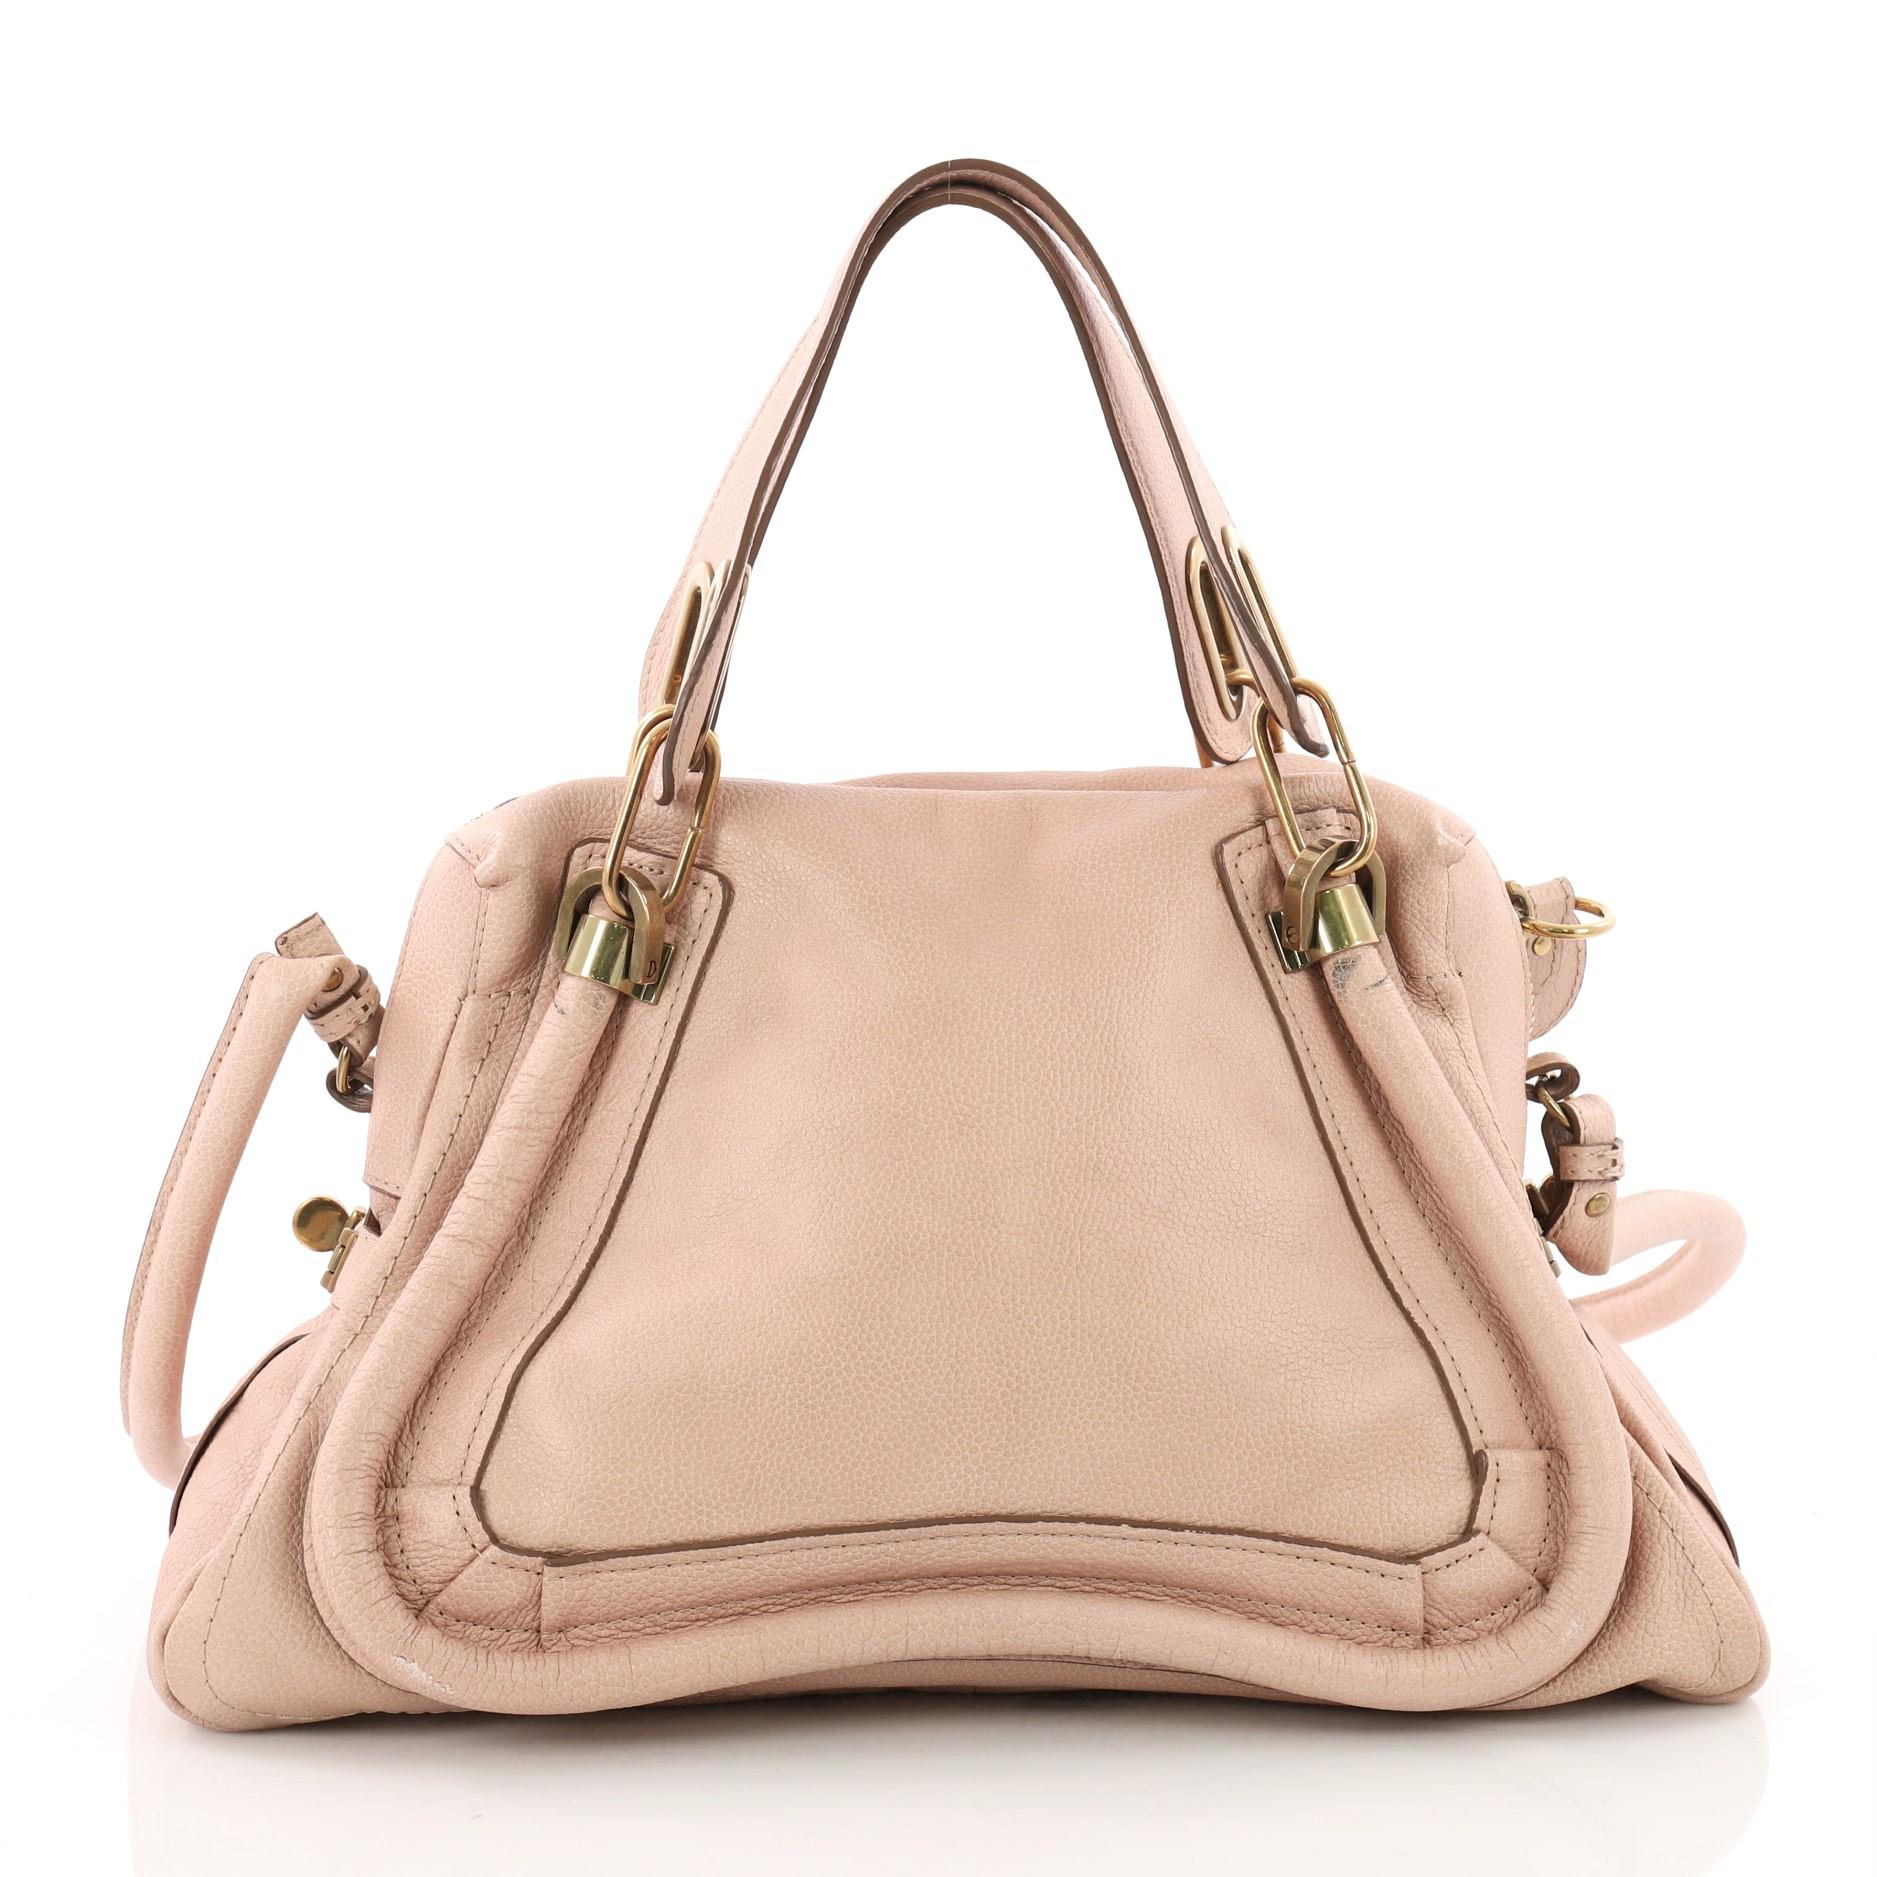 Beige Chloe Paraty Top Handle Bag Leather Medium